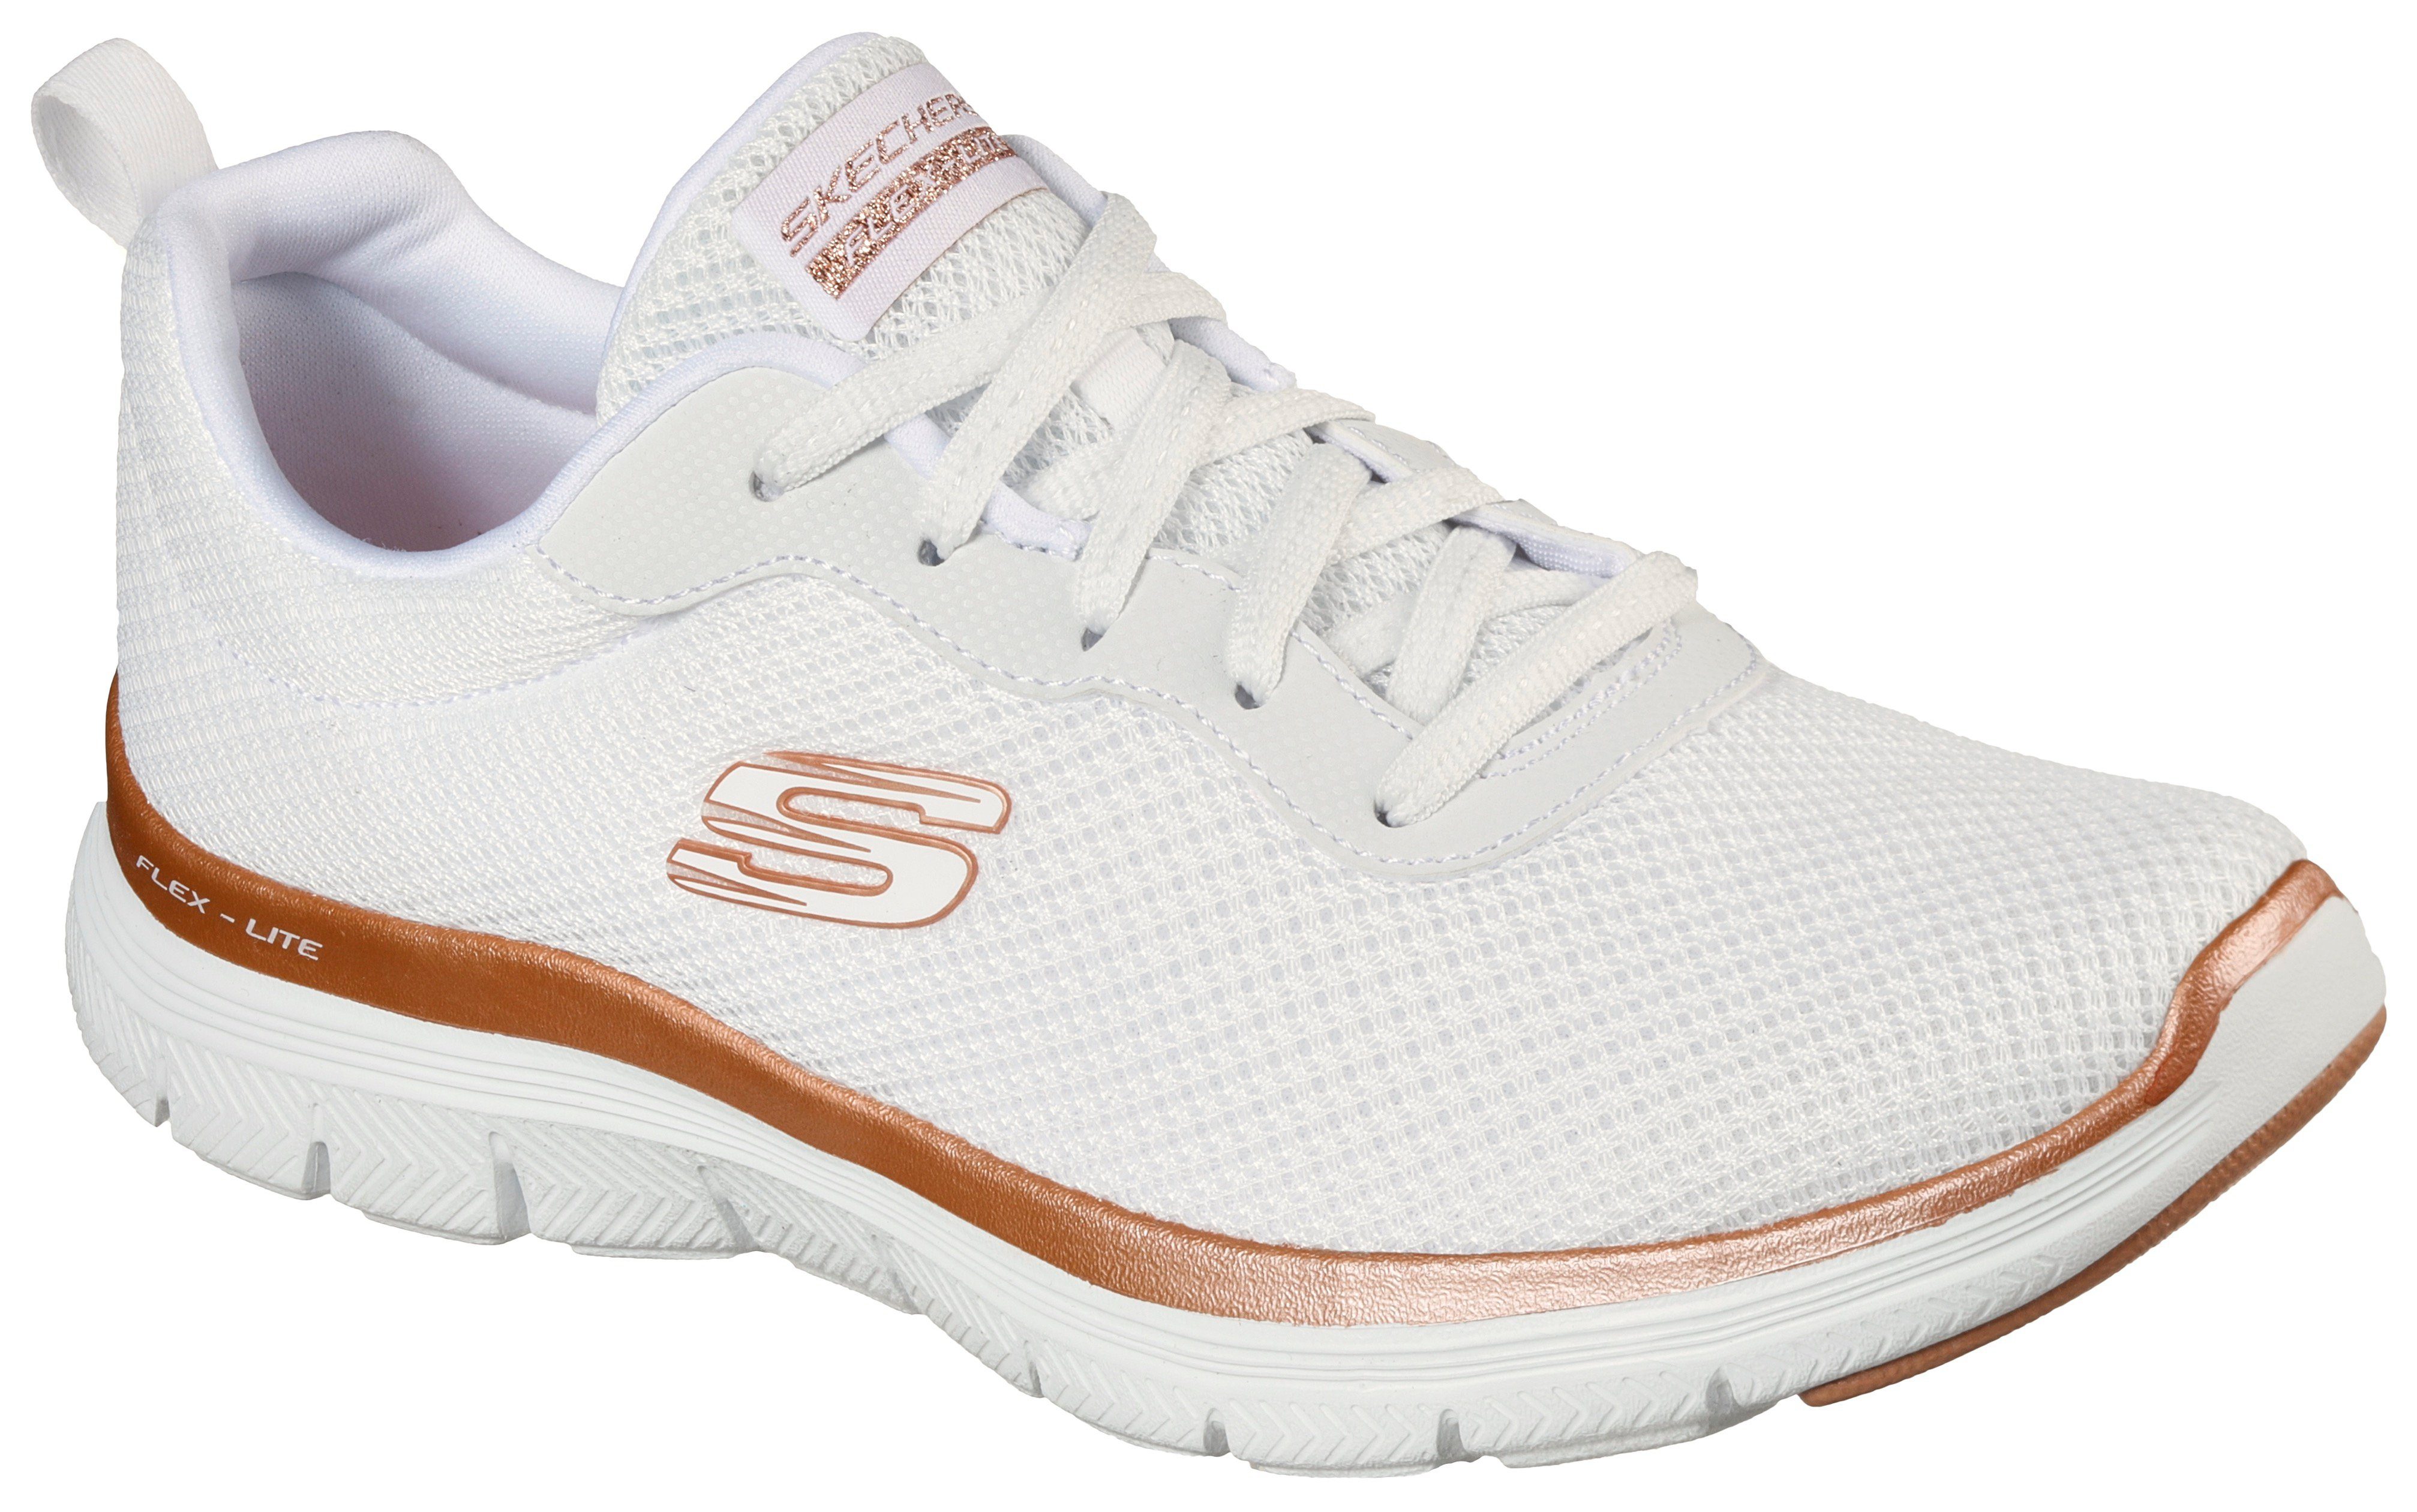 VIEW 4.0 Sneaker Foam weiß-roségoldfarben APPEAL Ausstattung BRILLINAT mit Air-Cooled Memory FLEX Skechers